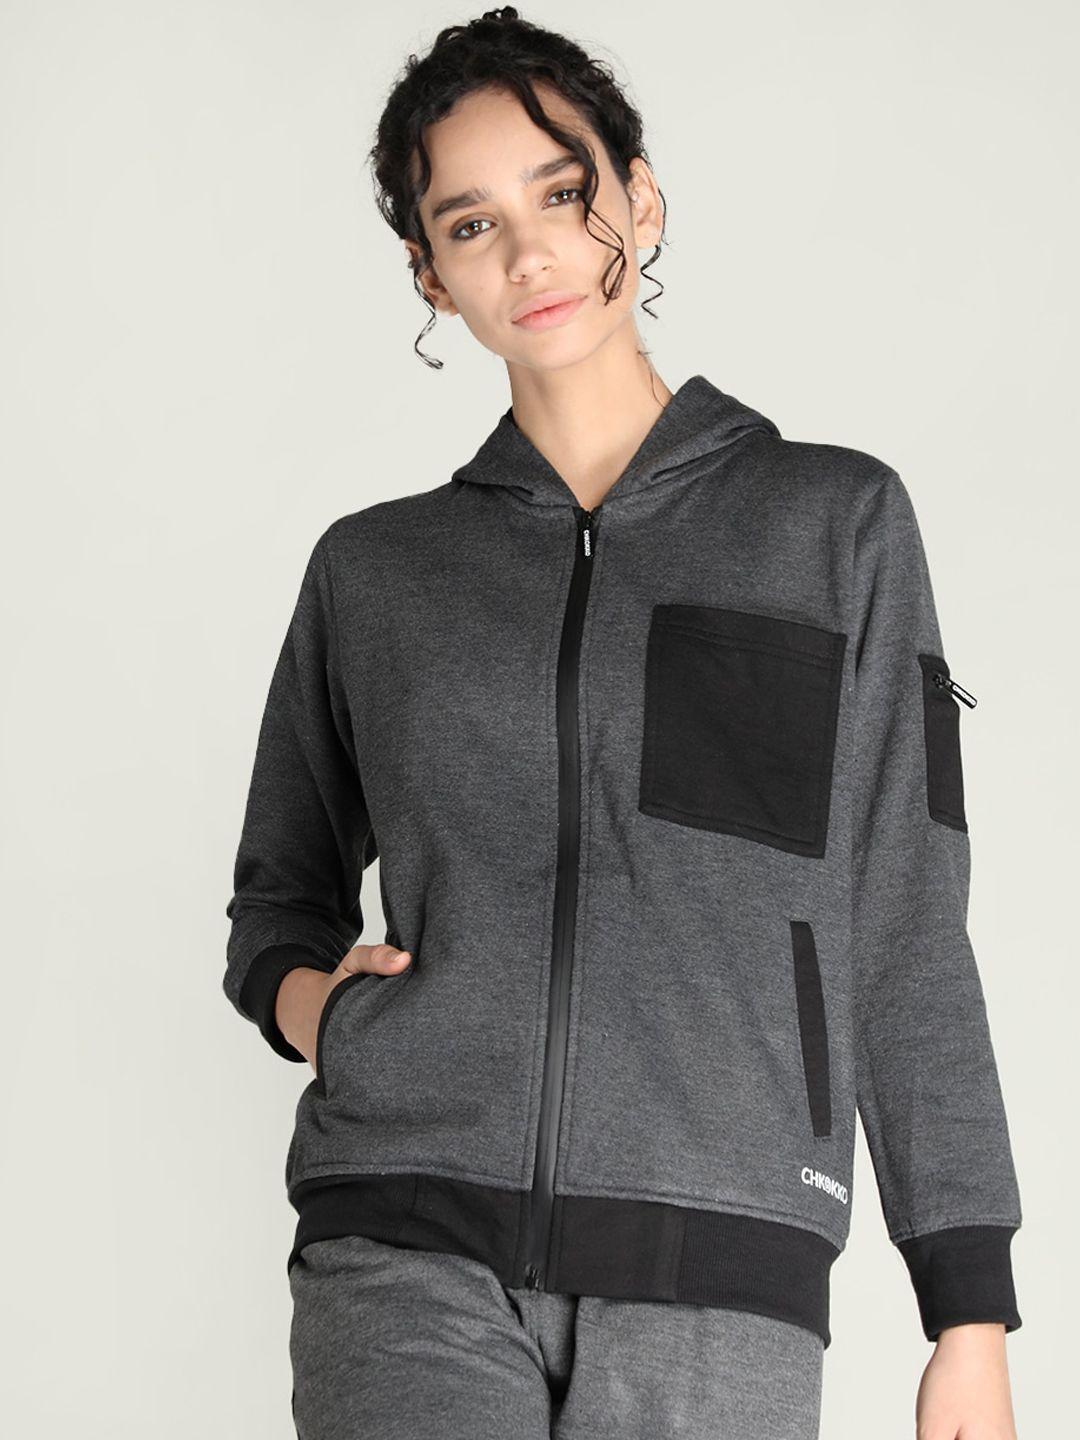 chkokko women grey outdoor sporty jacket